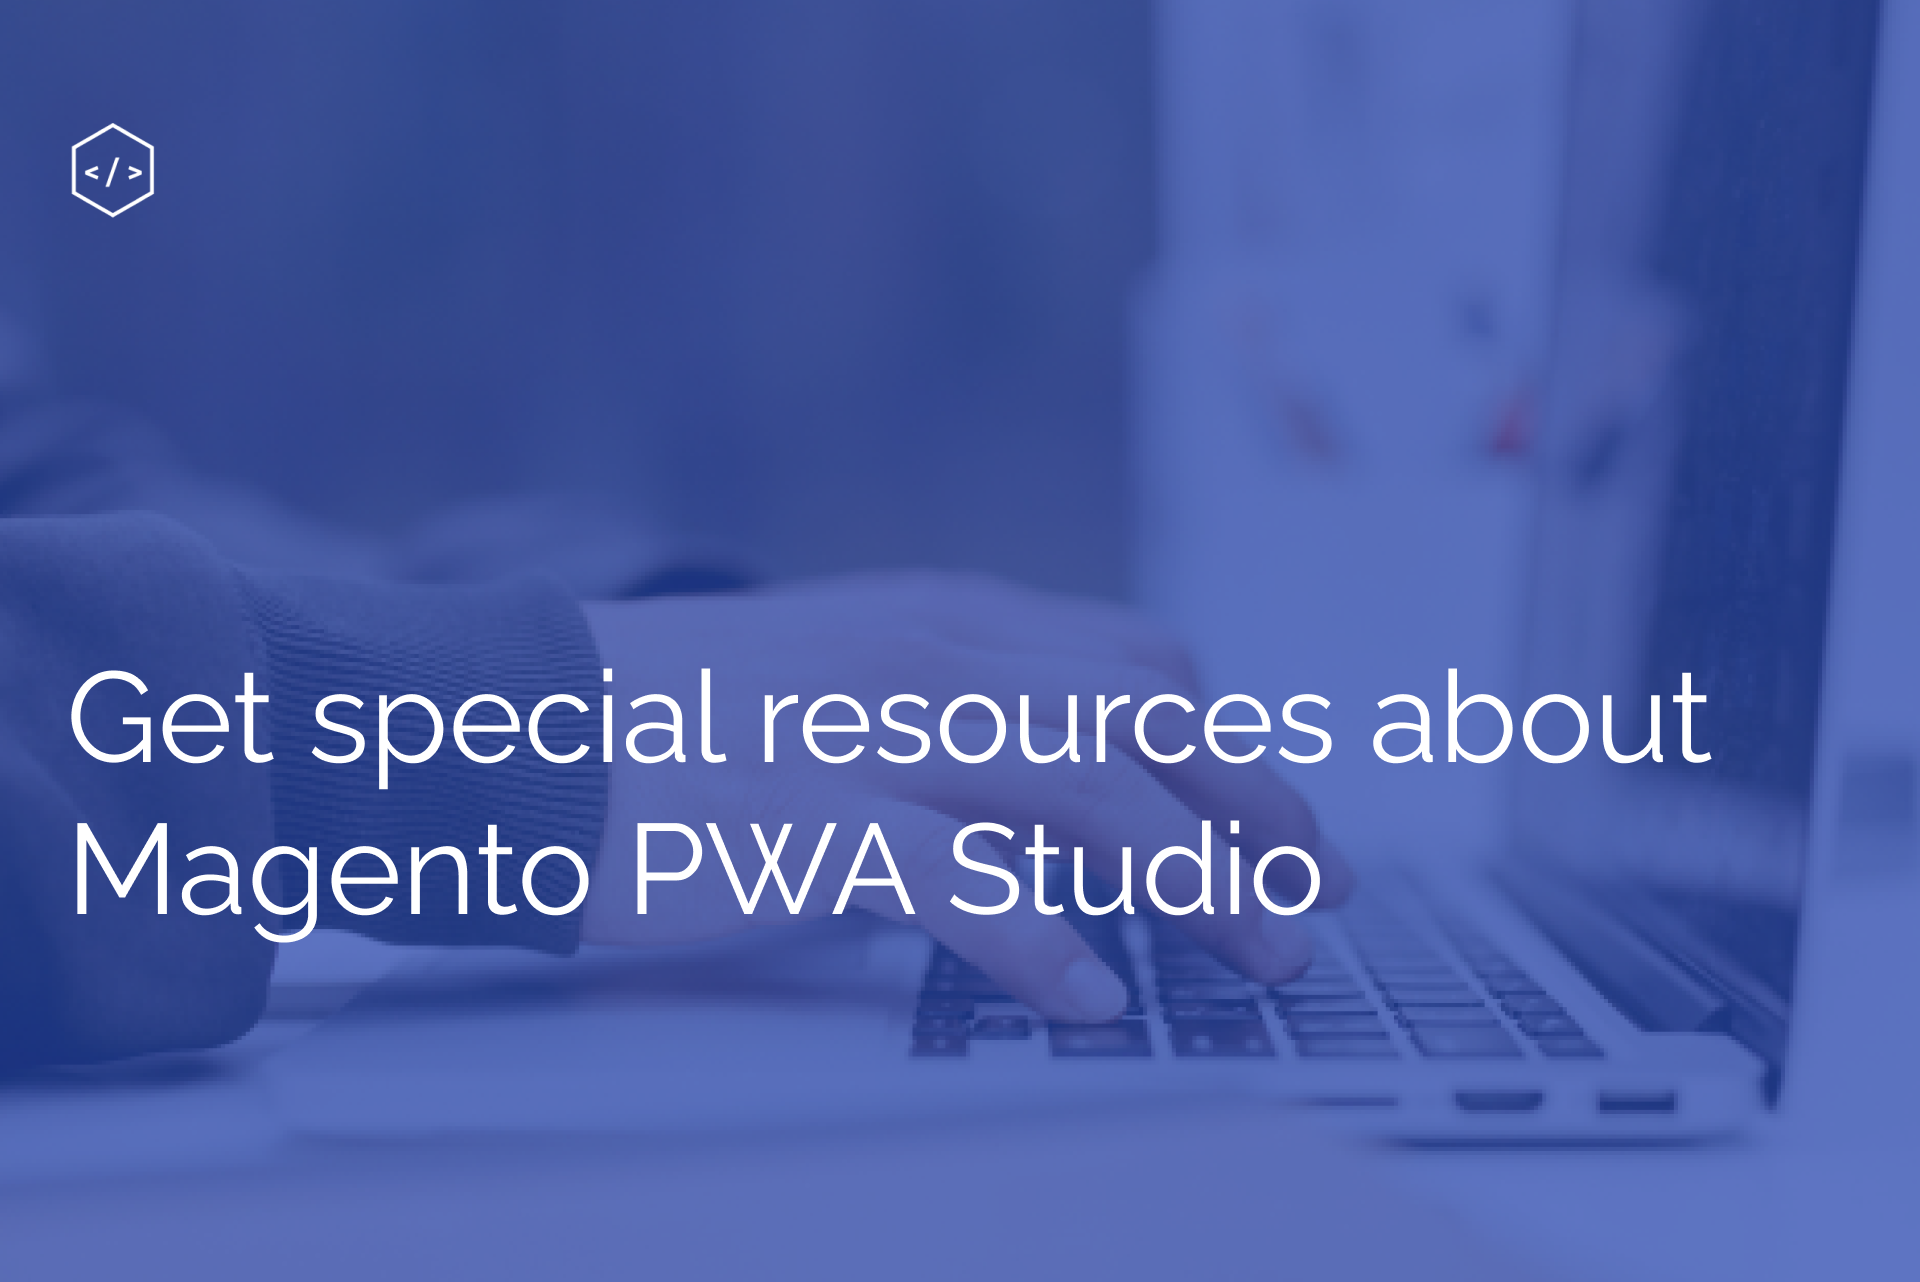 Magento PWA Studio: Useful Resources